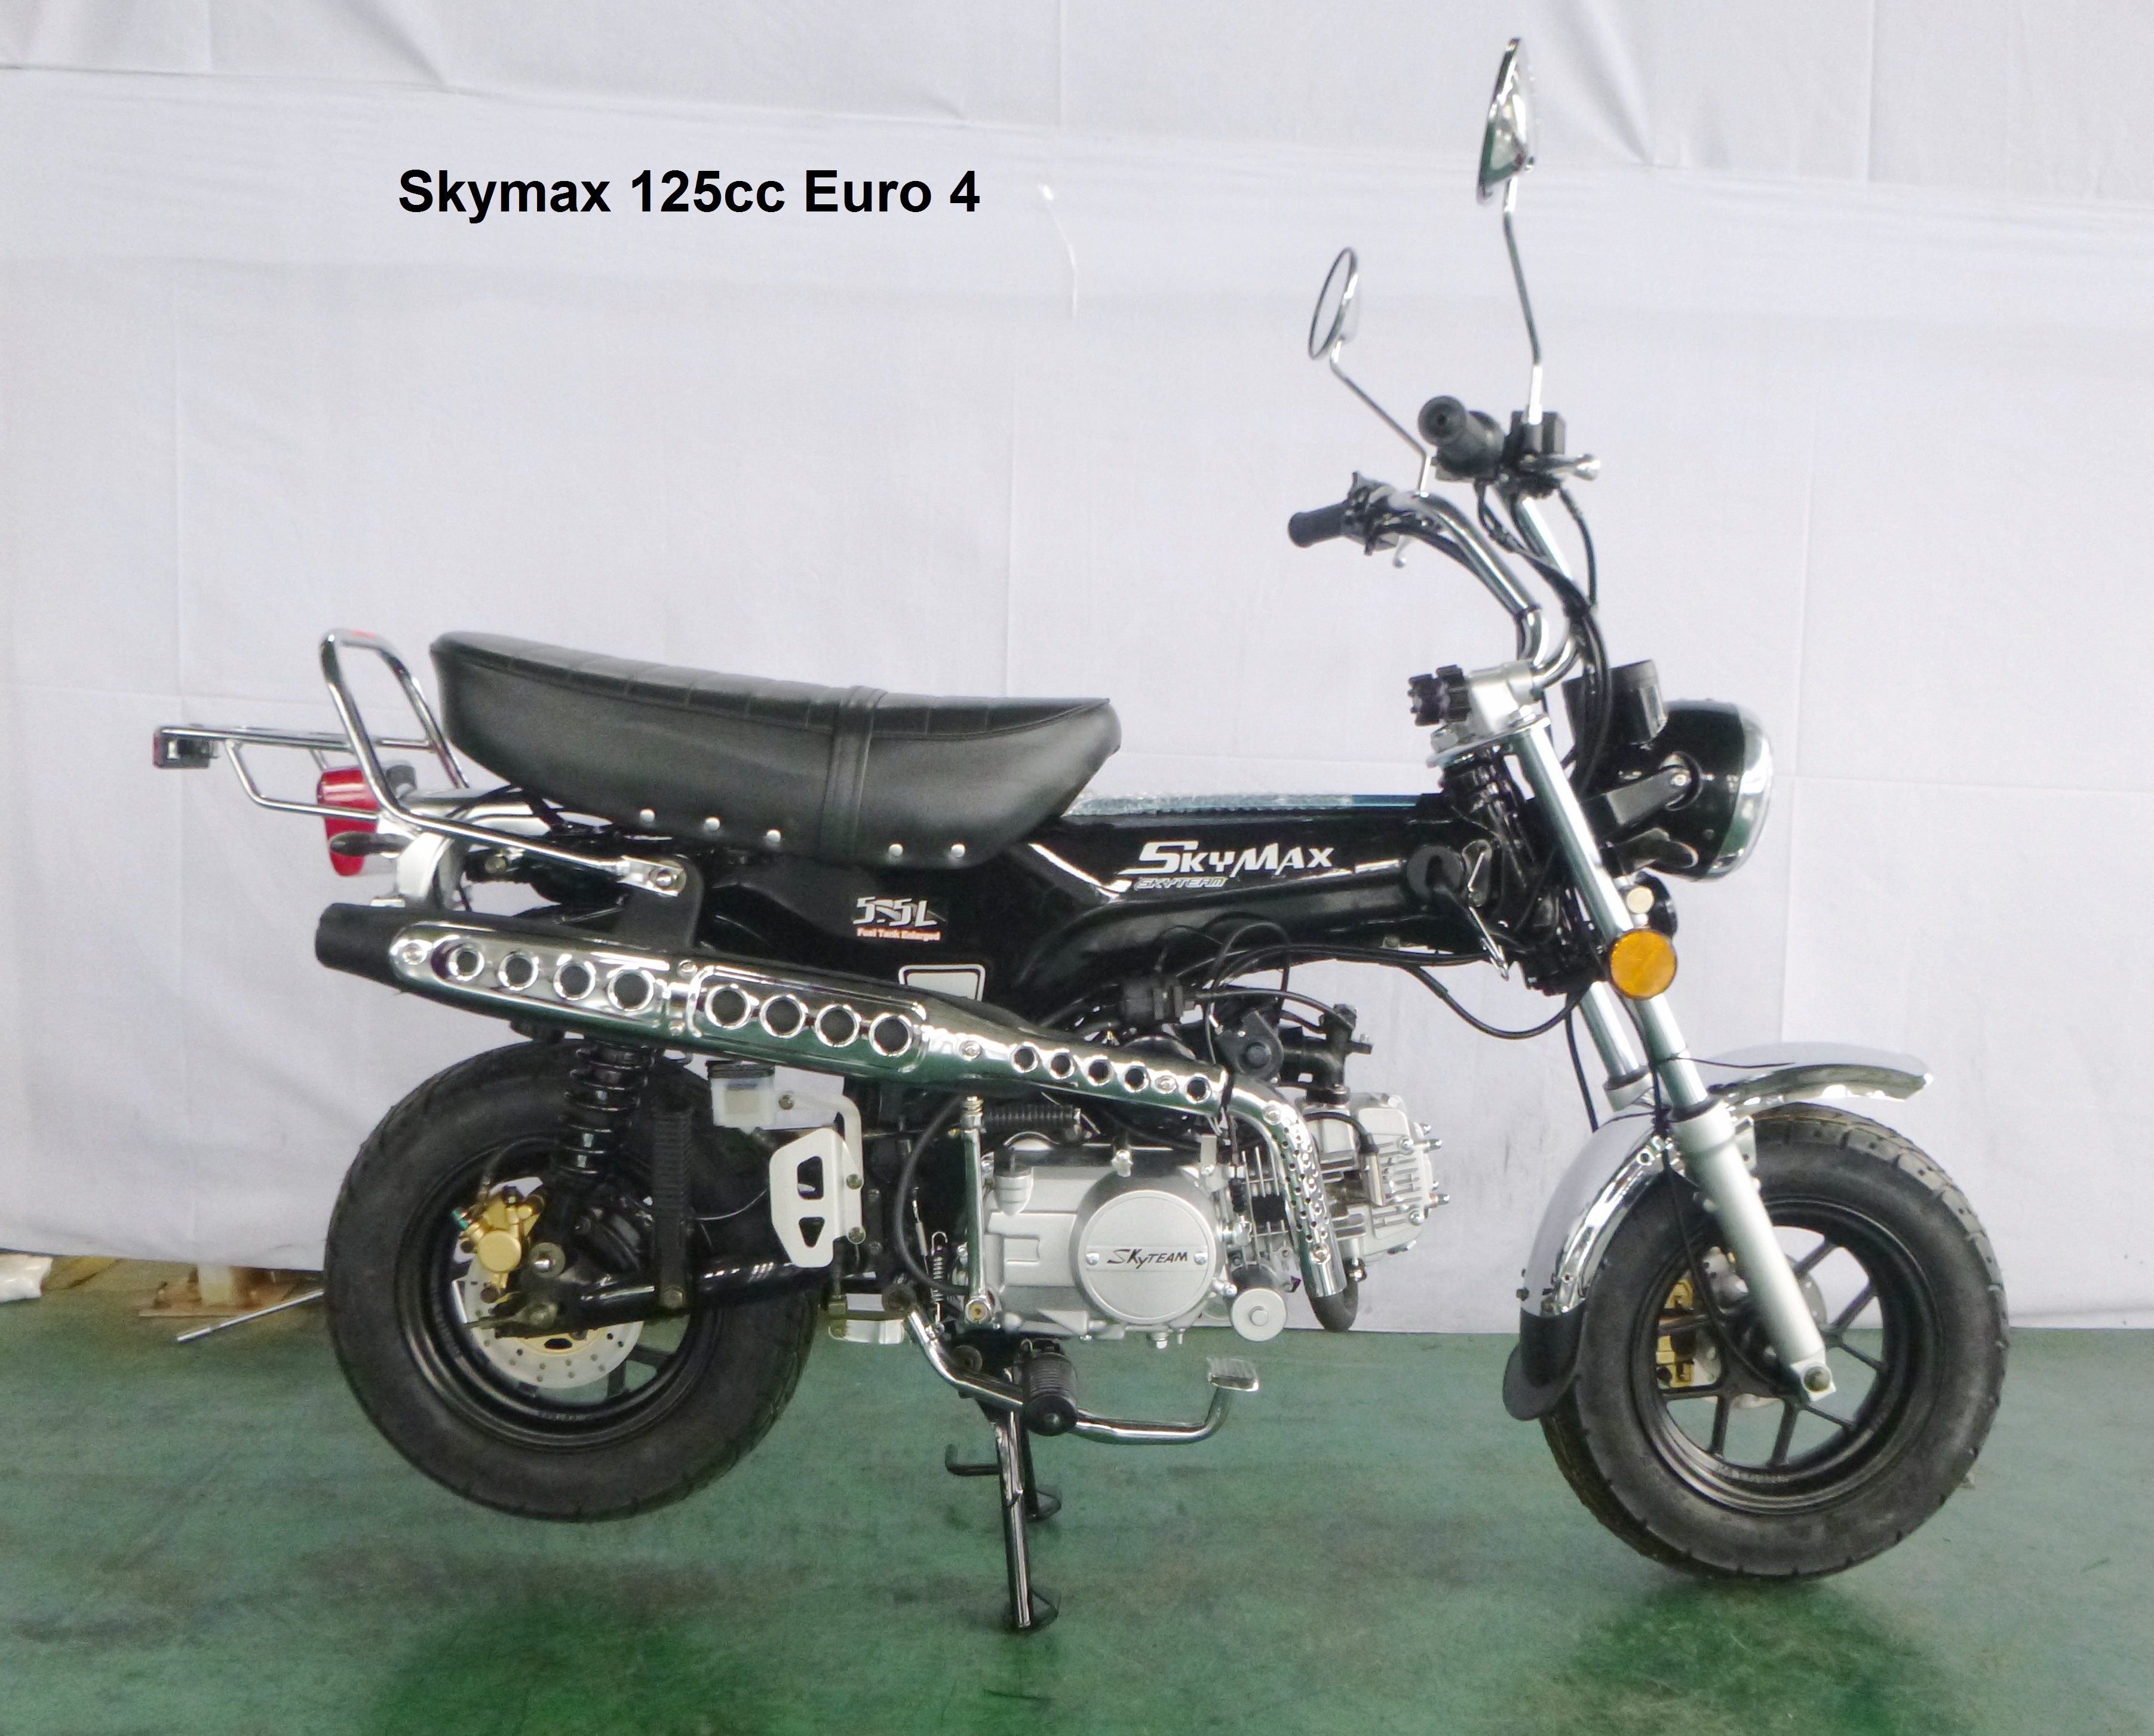 Skymax 125cc Euro 4